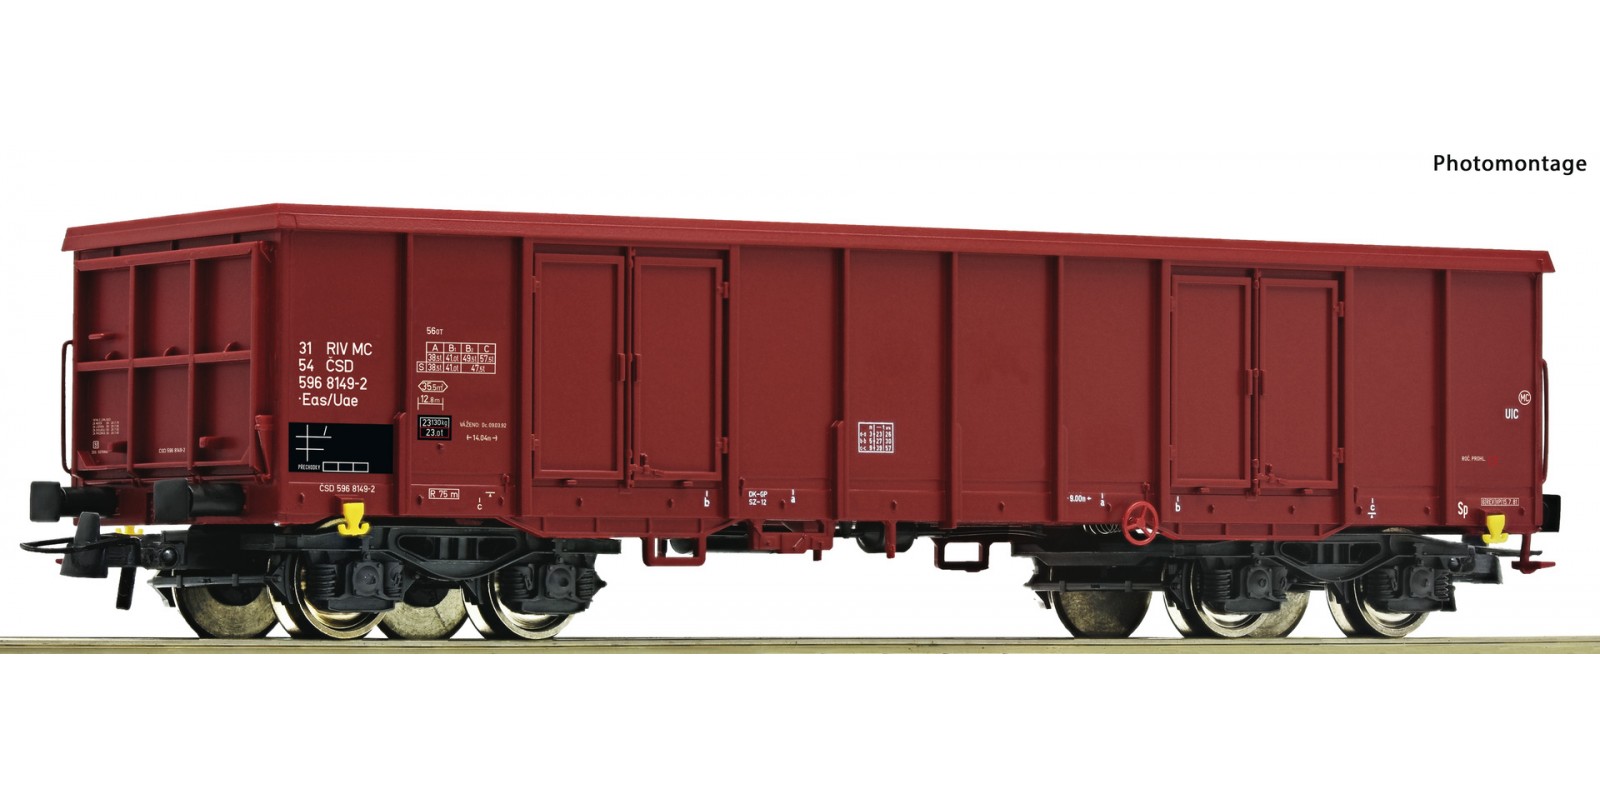 RO6600004 Open freight wagon, CSD                            